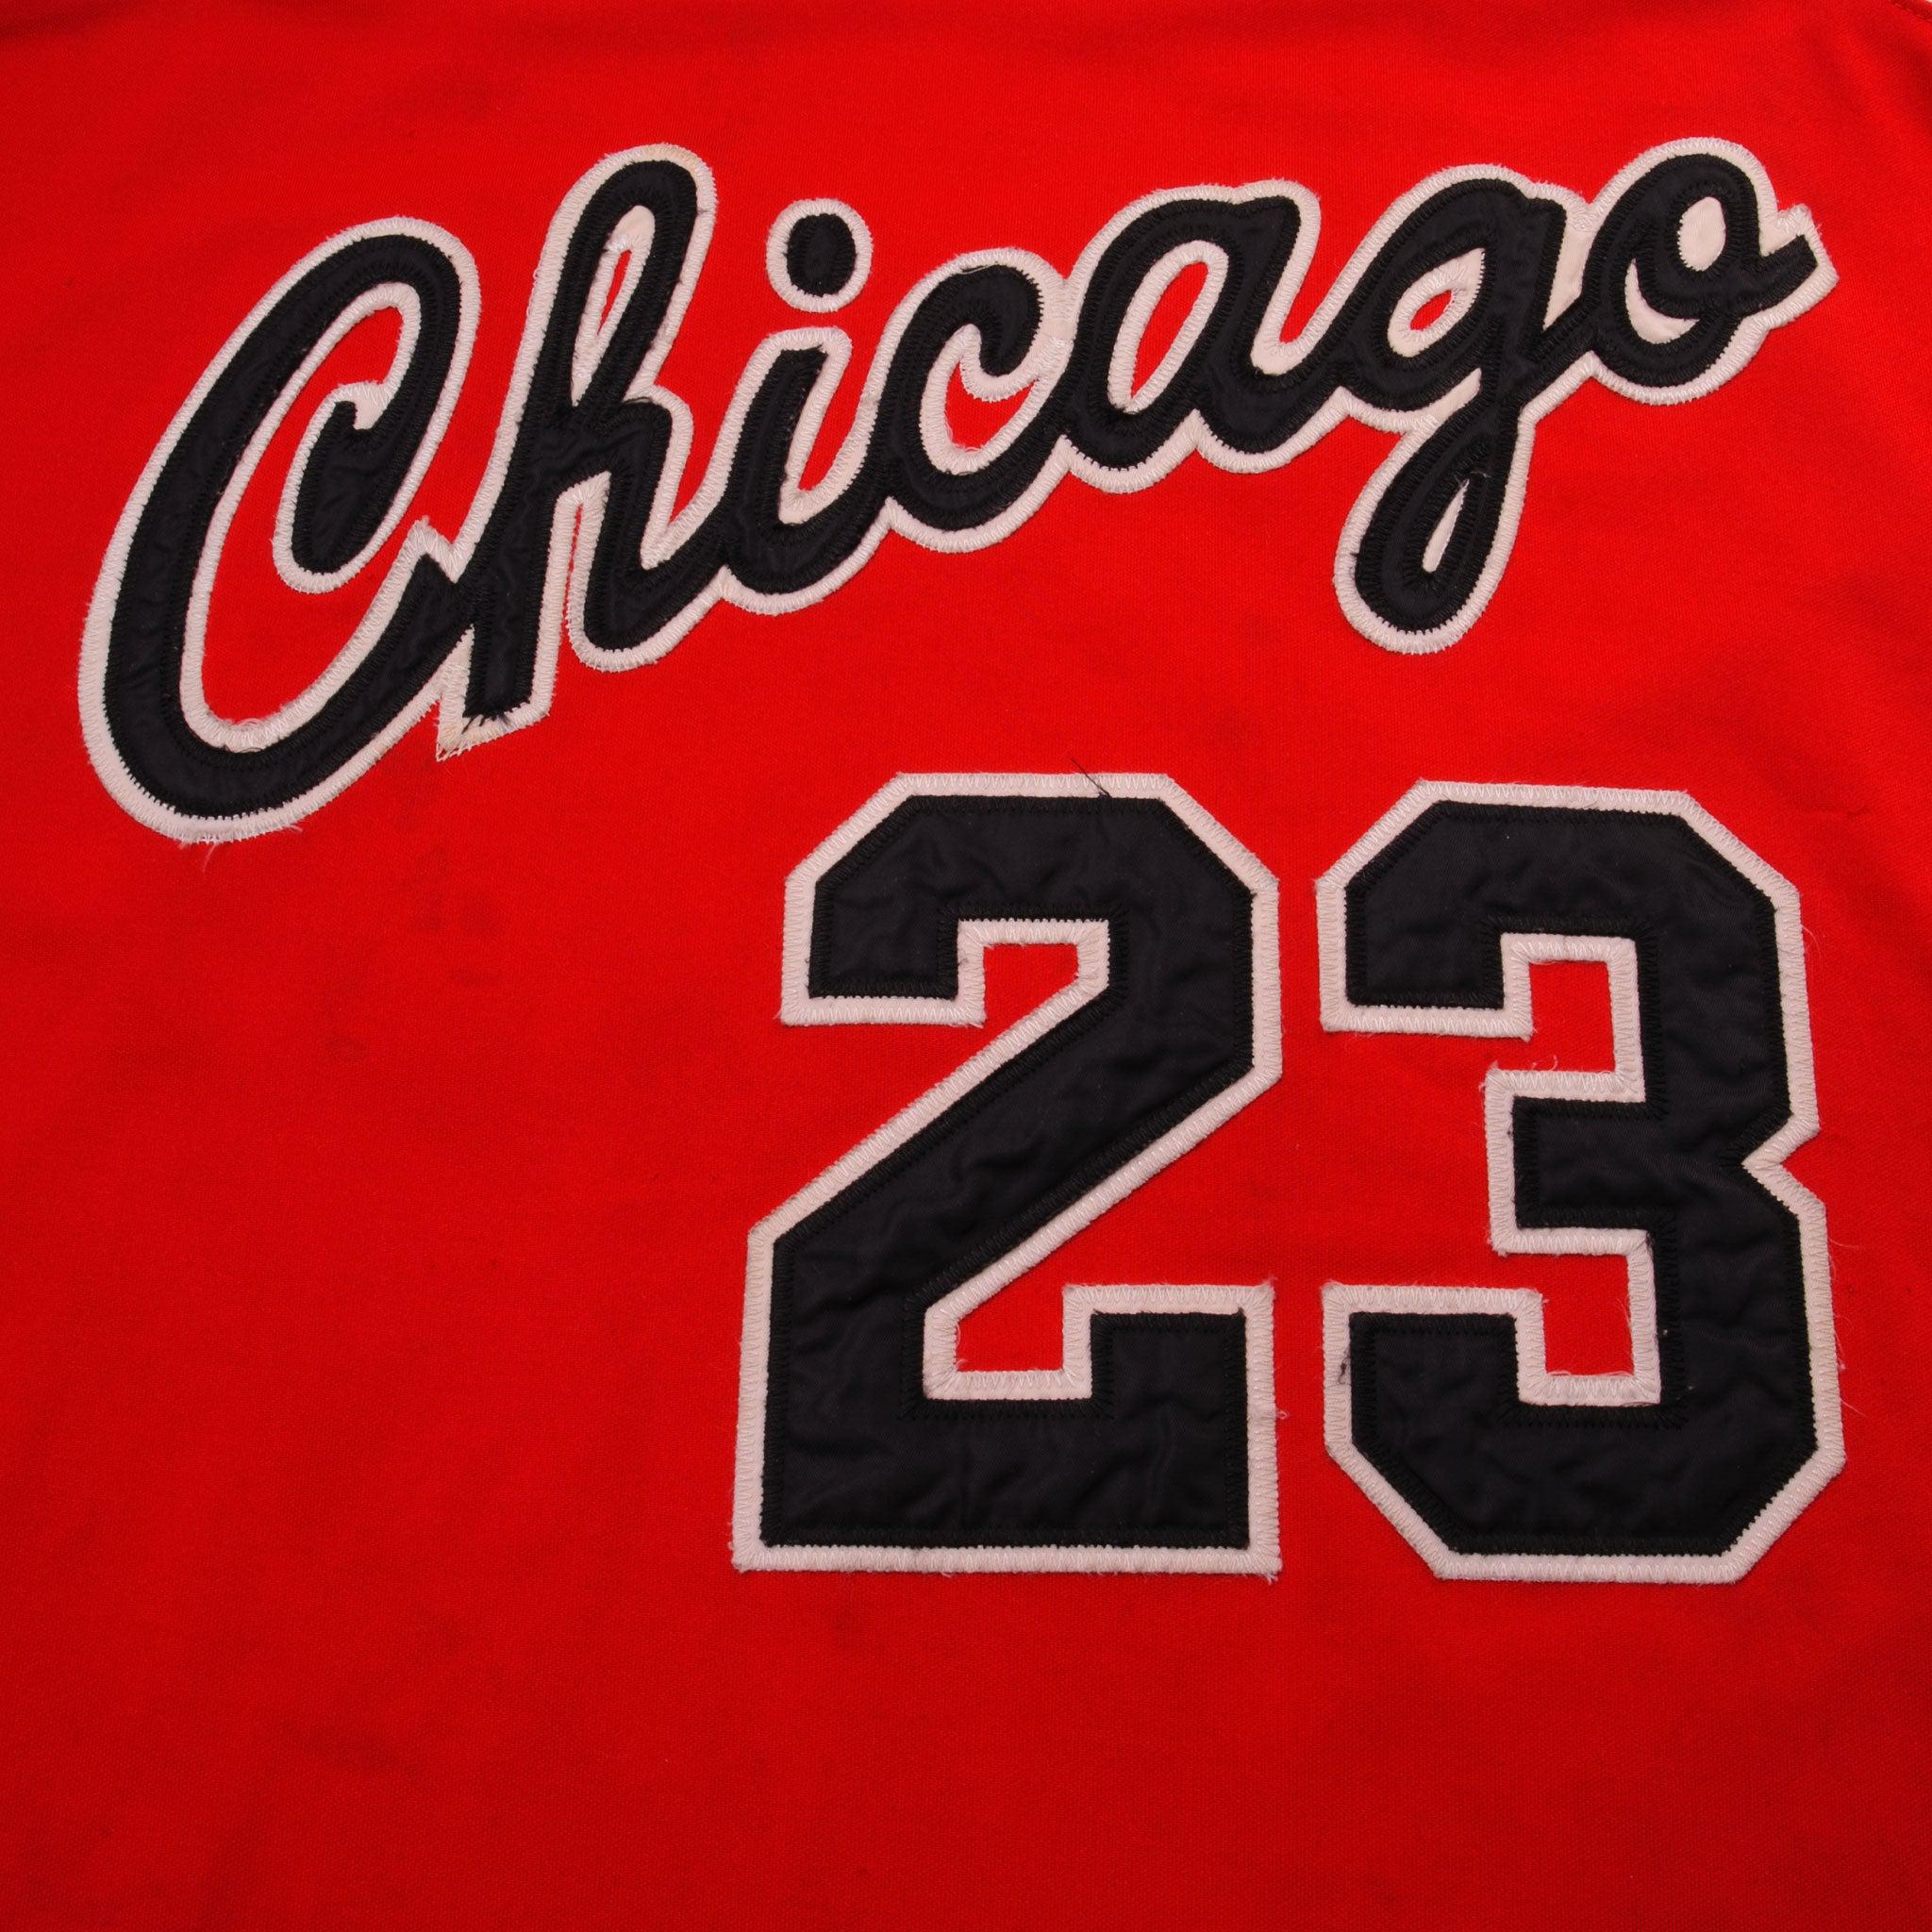 Hardwood Classics Michael Jordan Chicago Bulls Jersey 1984-85 Size 60 4XL